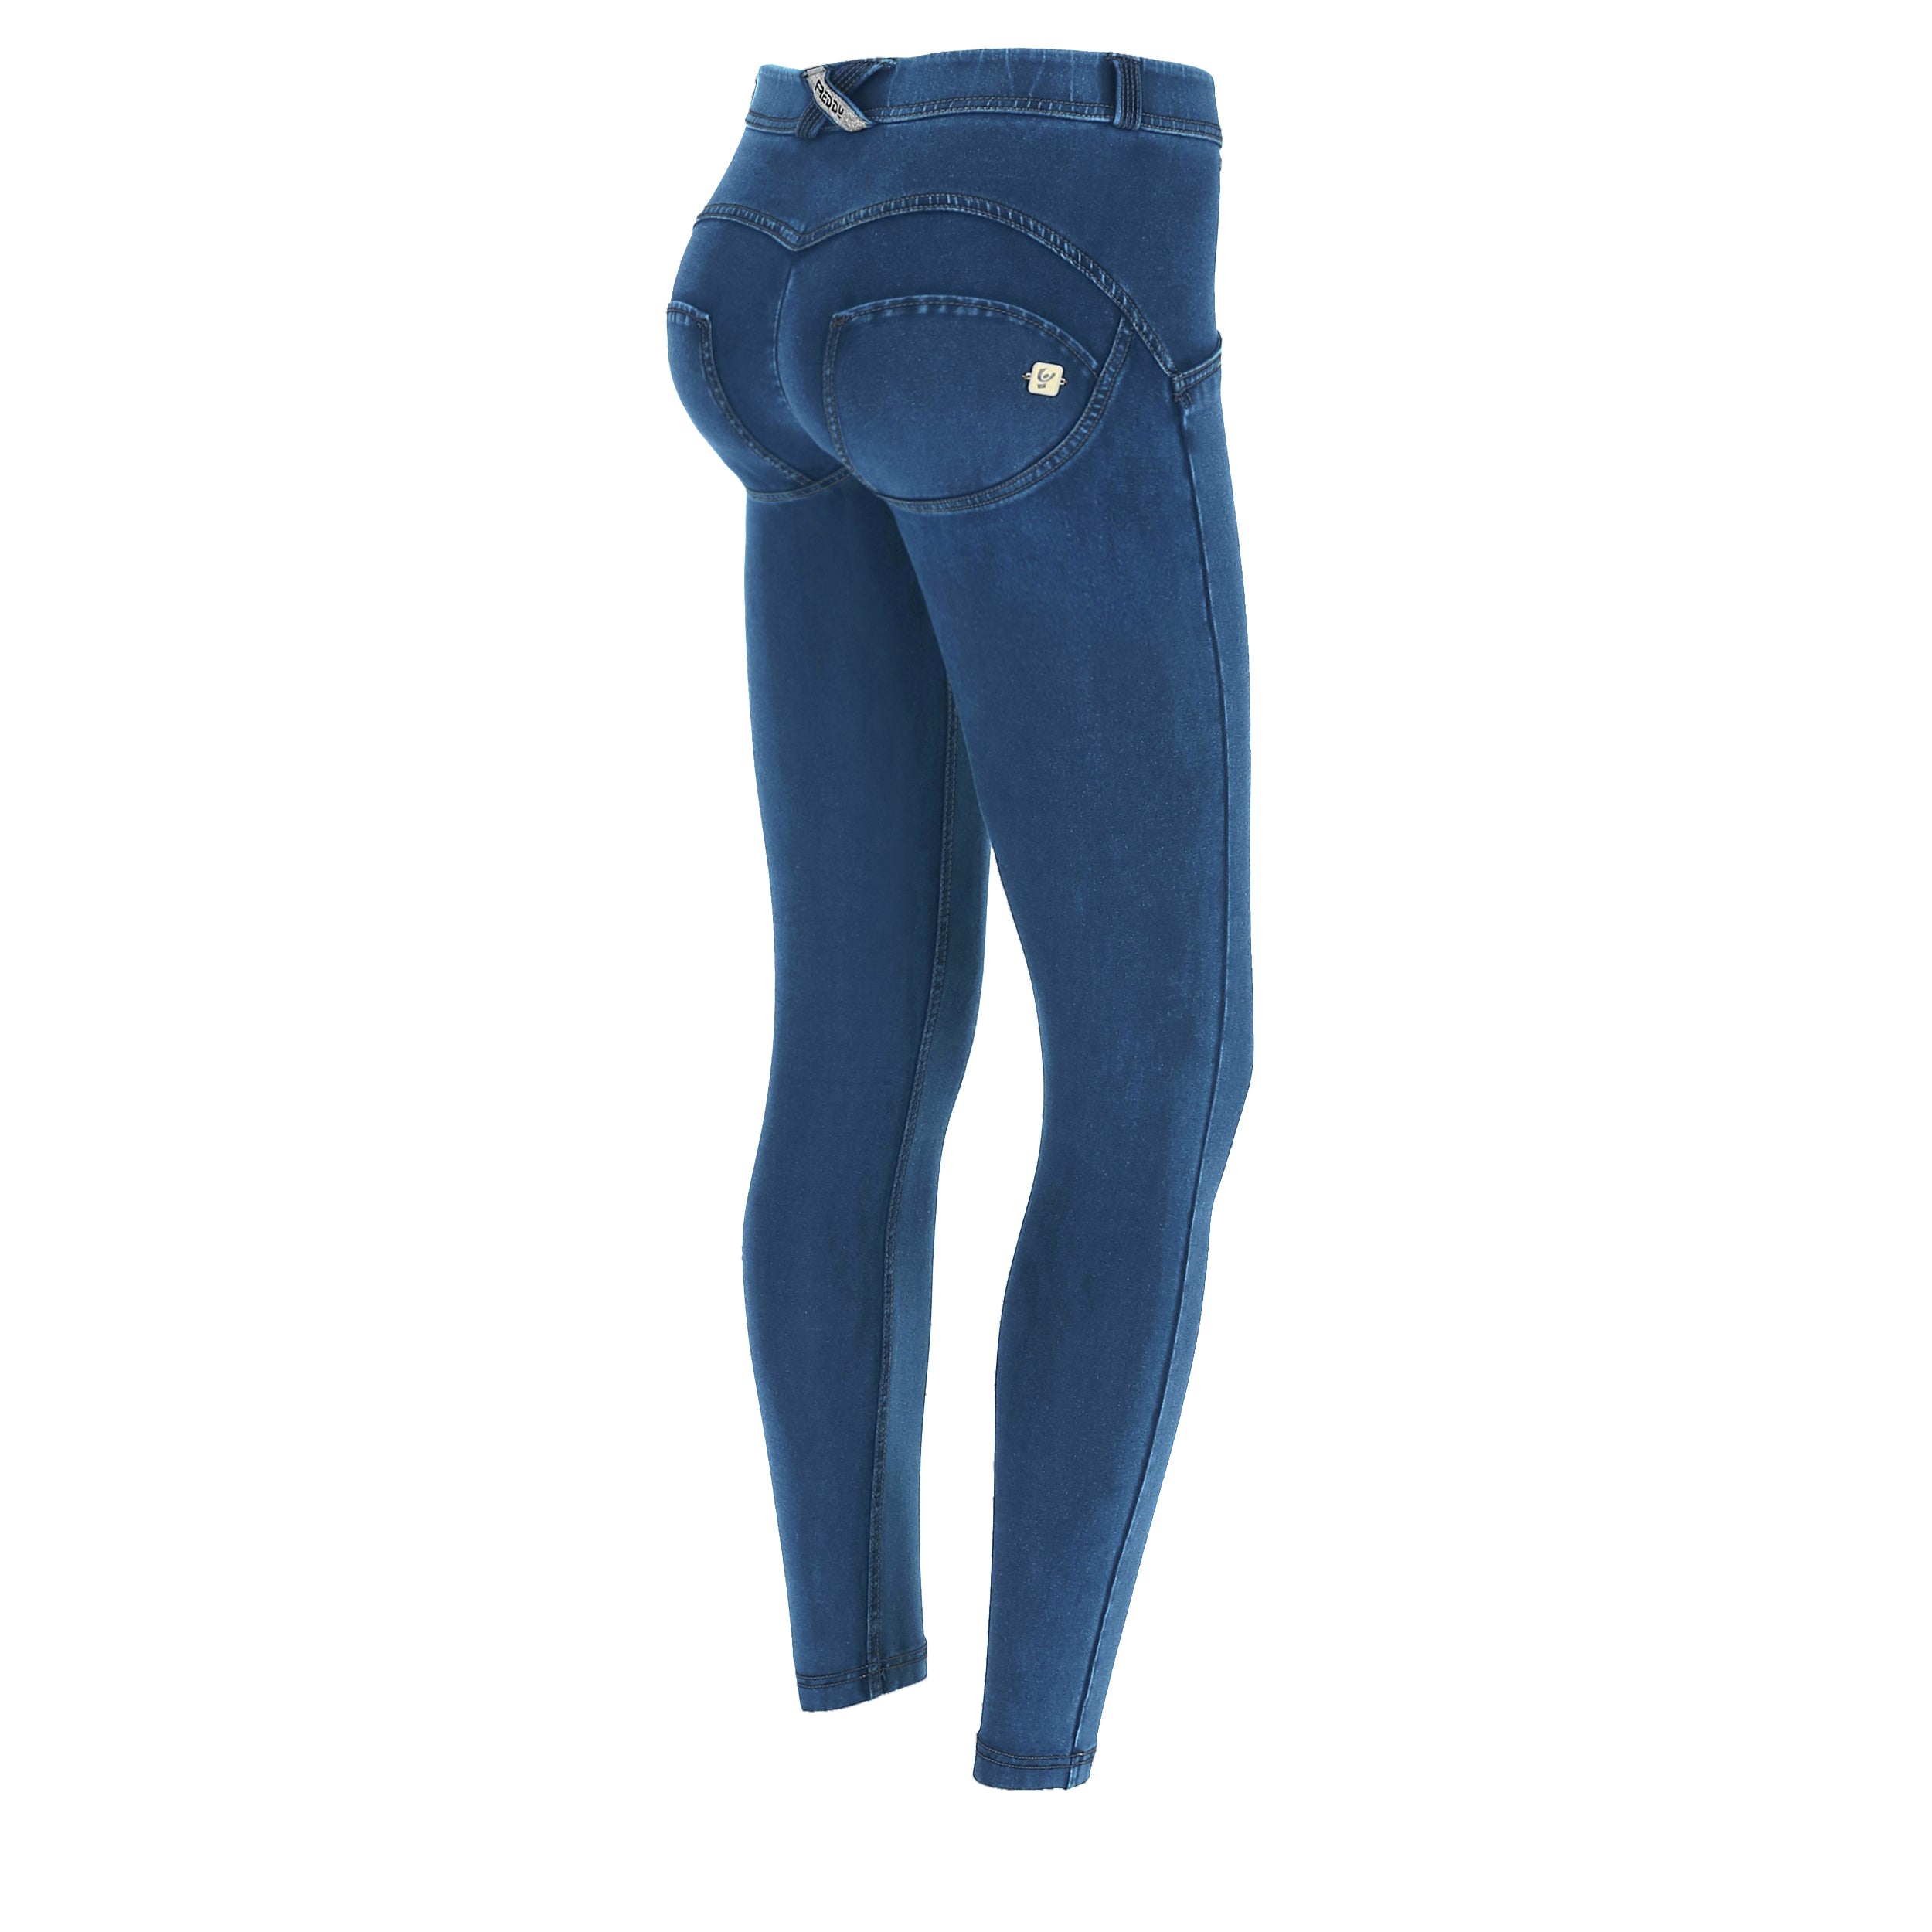 freddy push up shaping regular waist ankle length pants shapewear trousers broek denim look jegging stretch comfort jeans blauw lichtblauw light blue